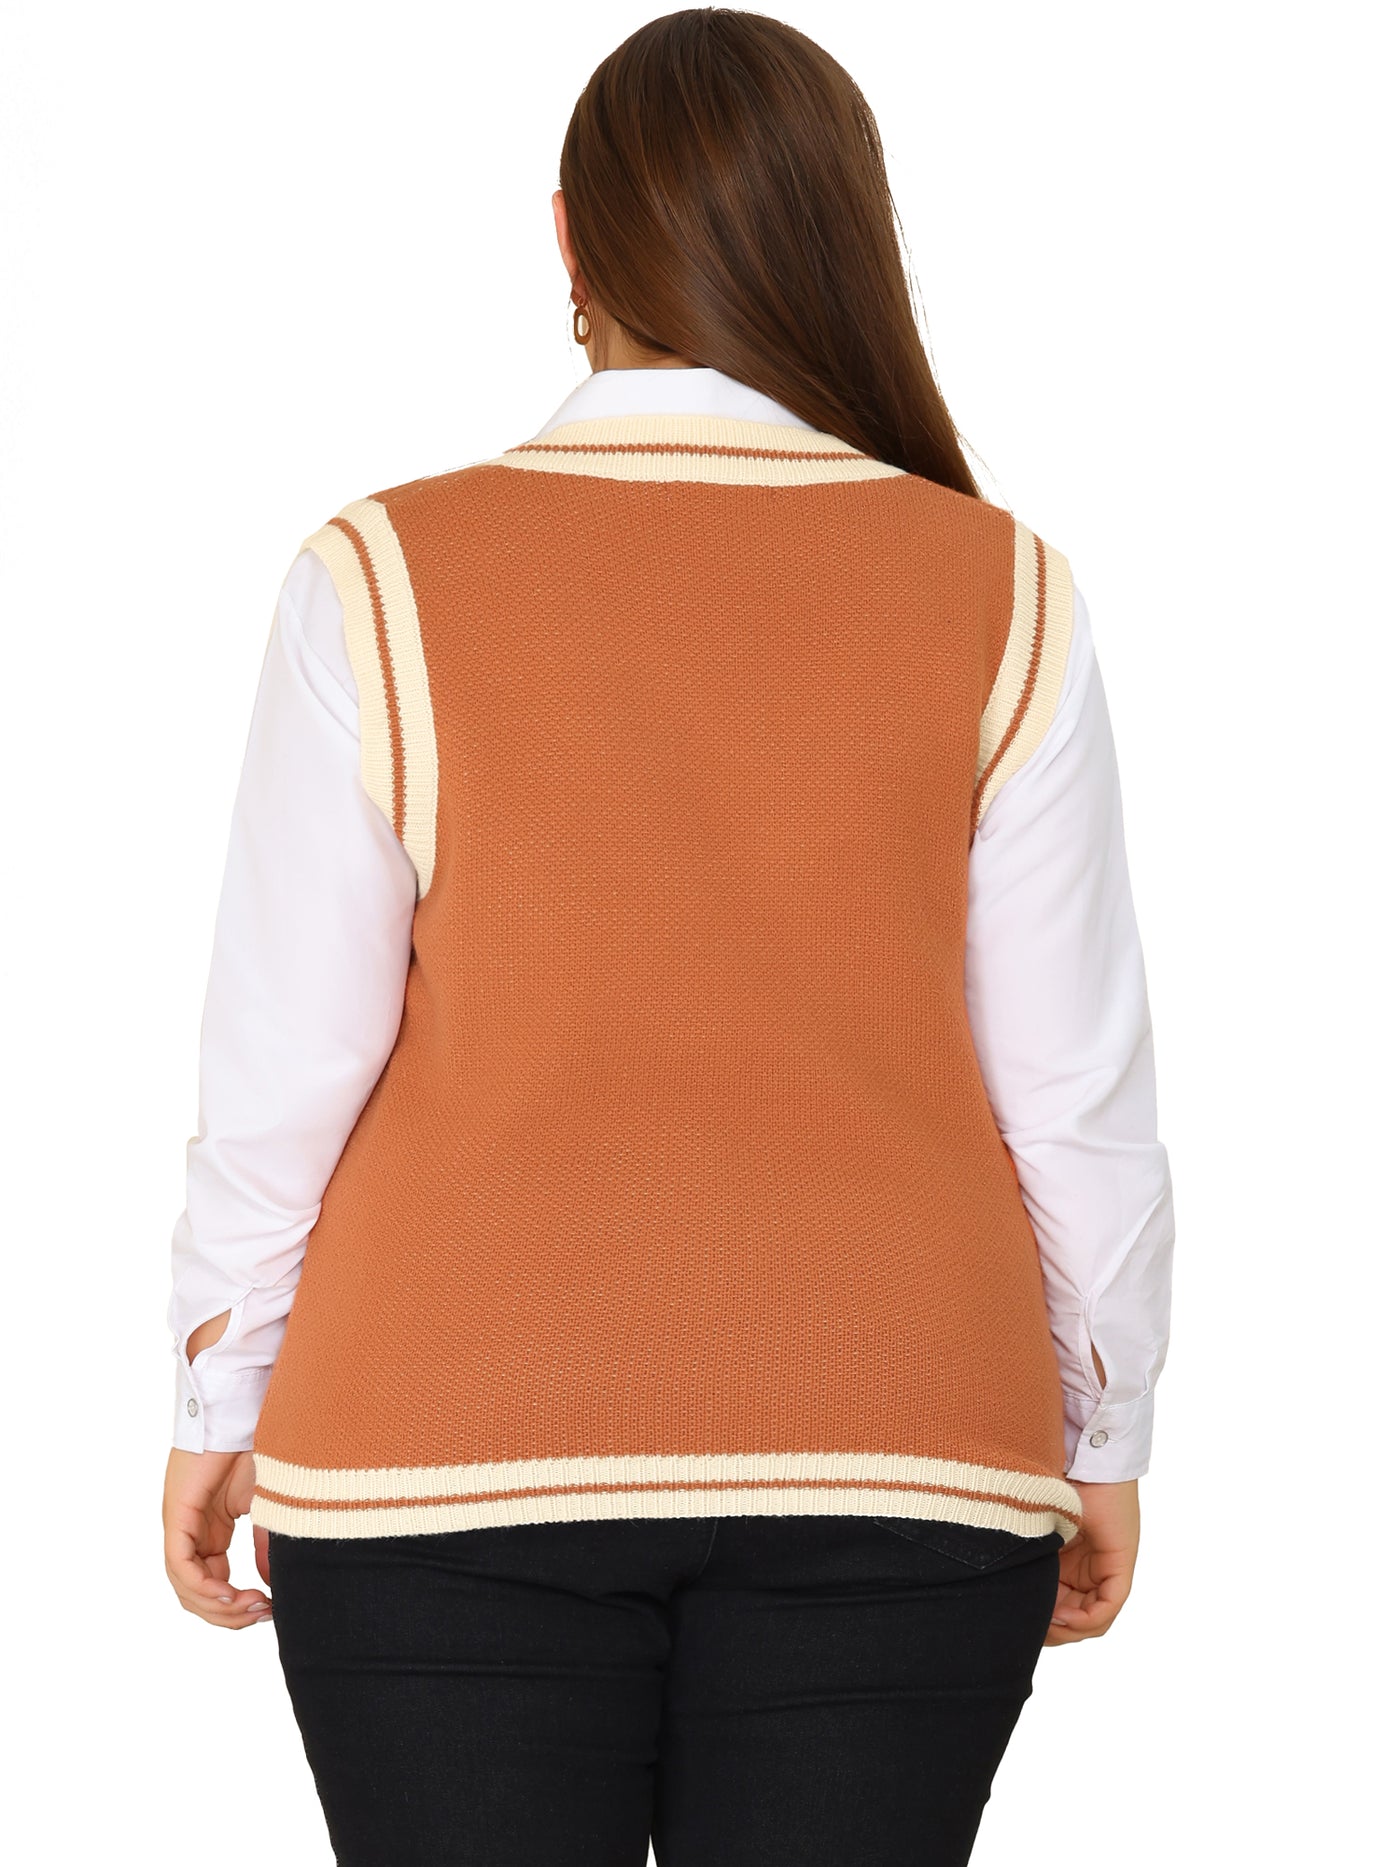 Bublédon Women's Plus Size Sweater Vest V Neck Bear Knit Sleeveless Pullover Sweaters Vests